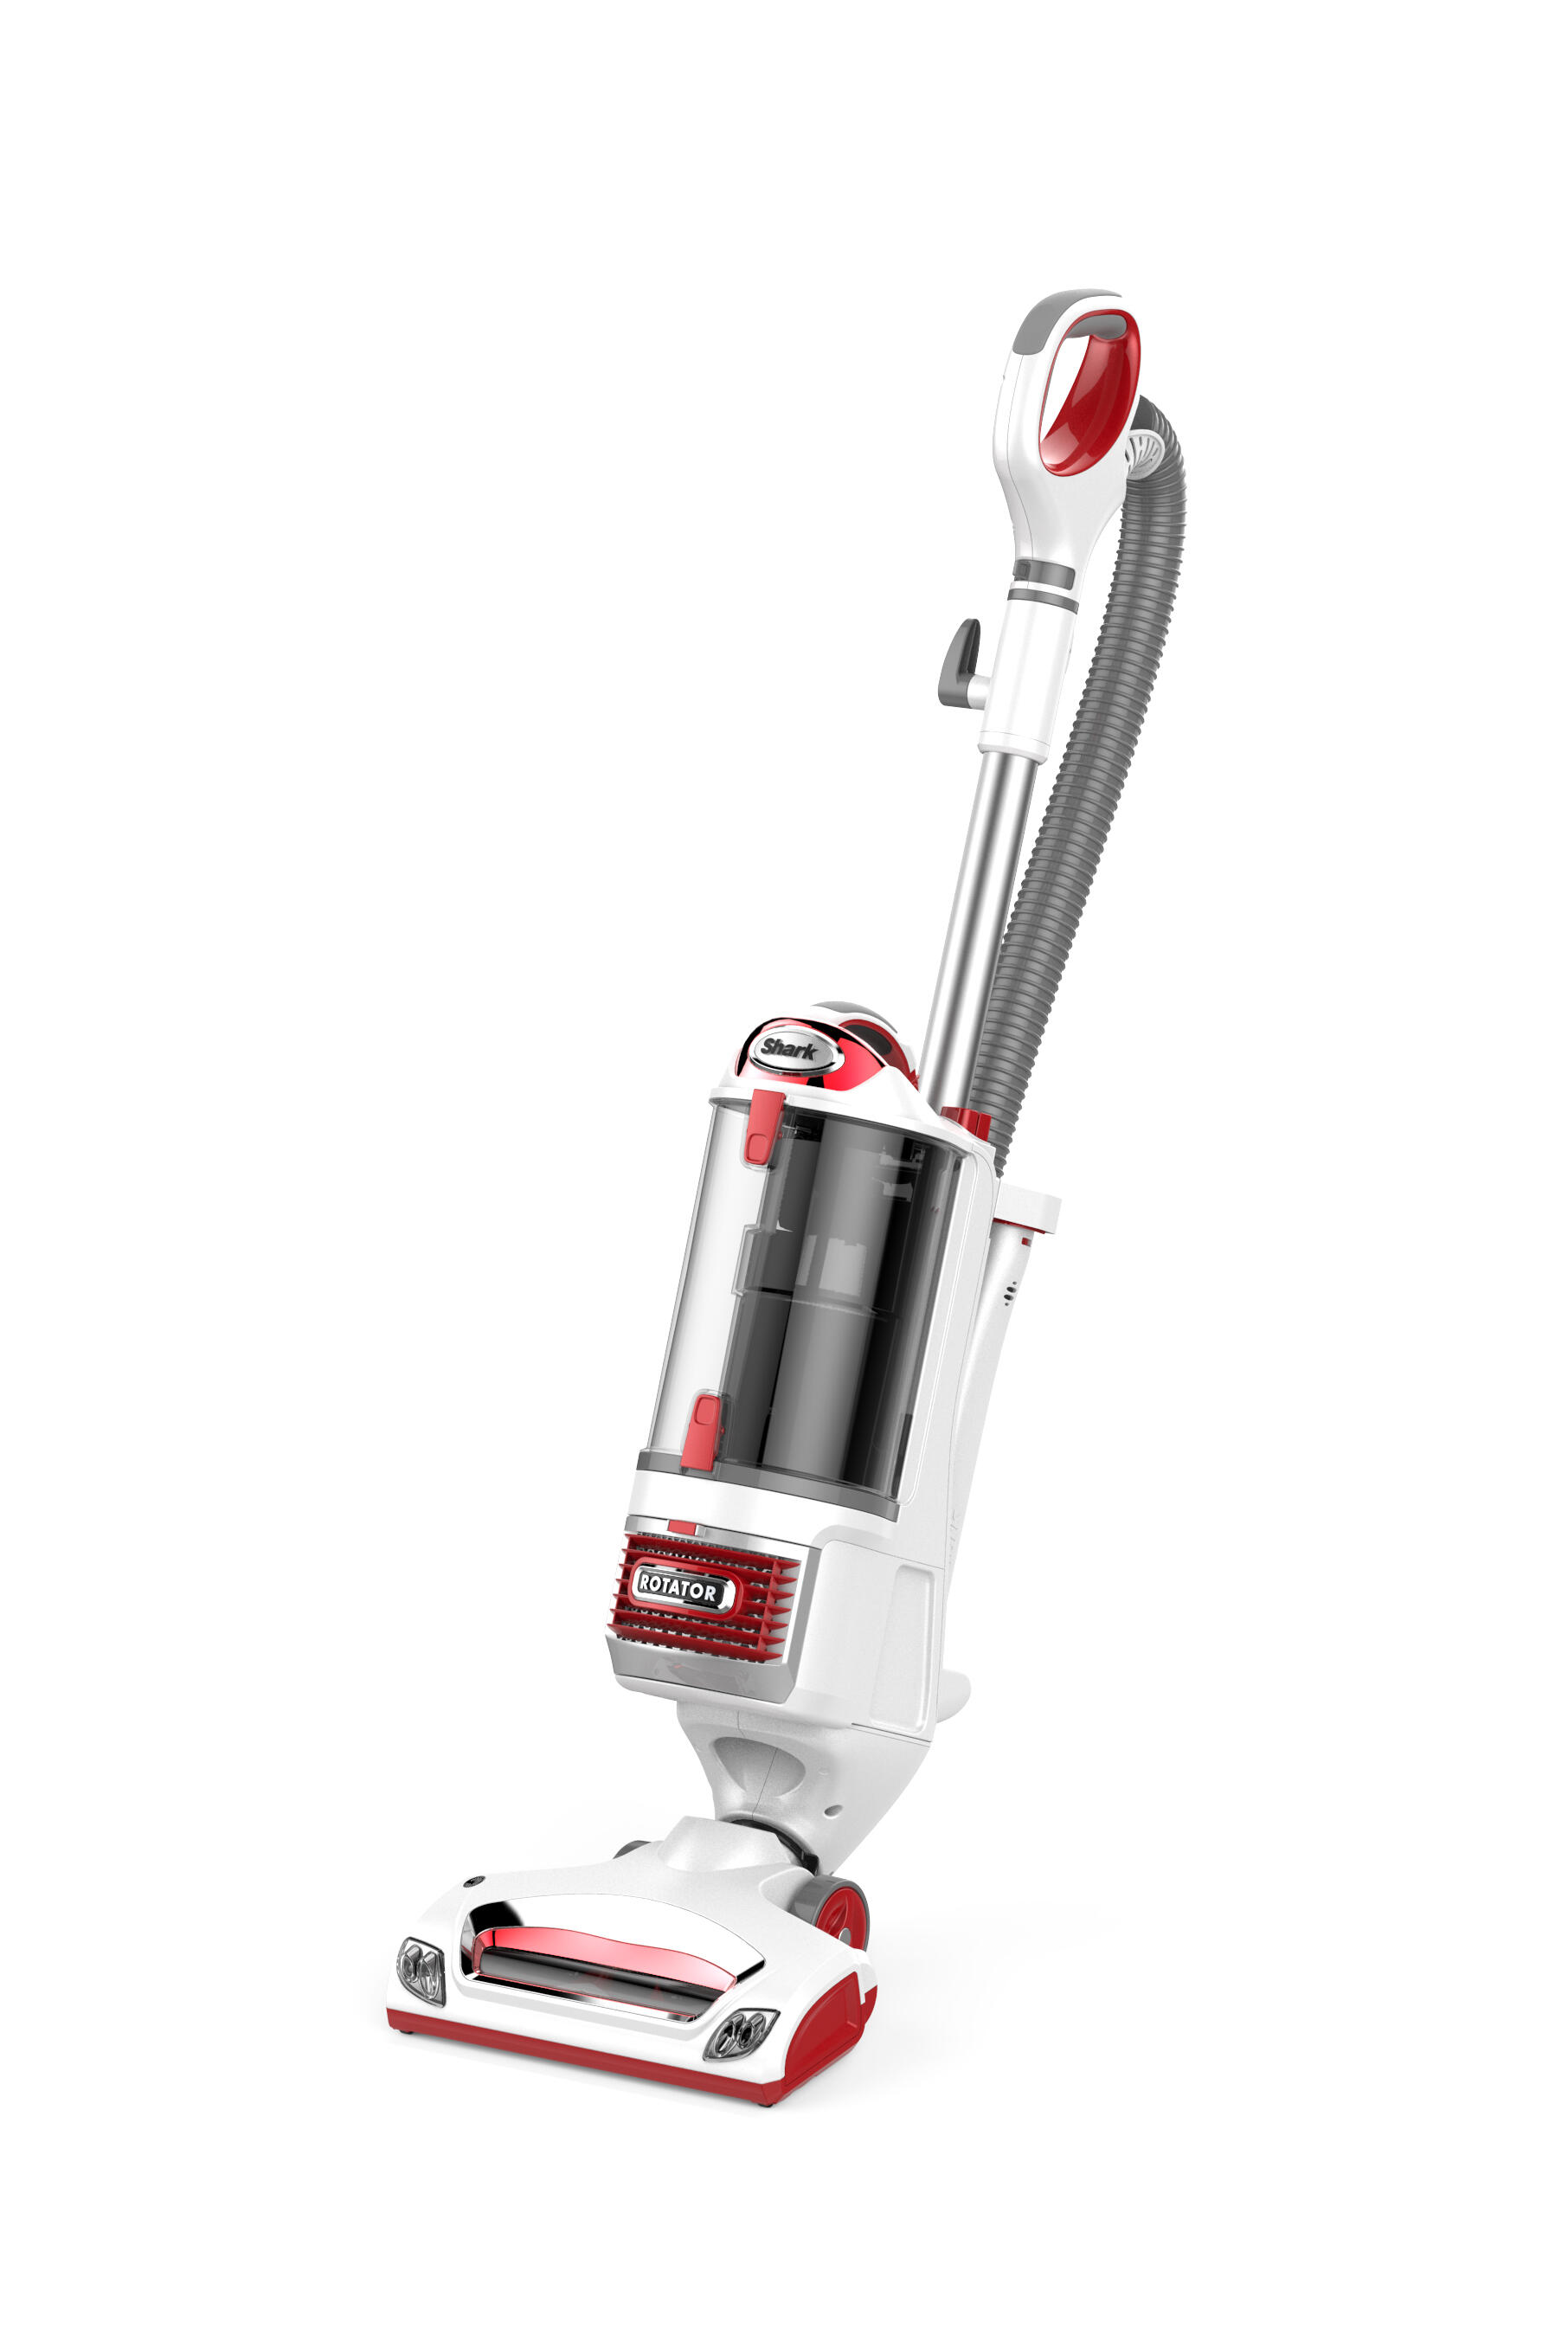 Shark NV501 Rotator Professional Lift-Away Upright Vacuum (Renewed)